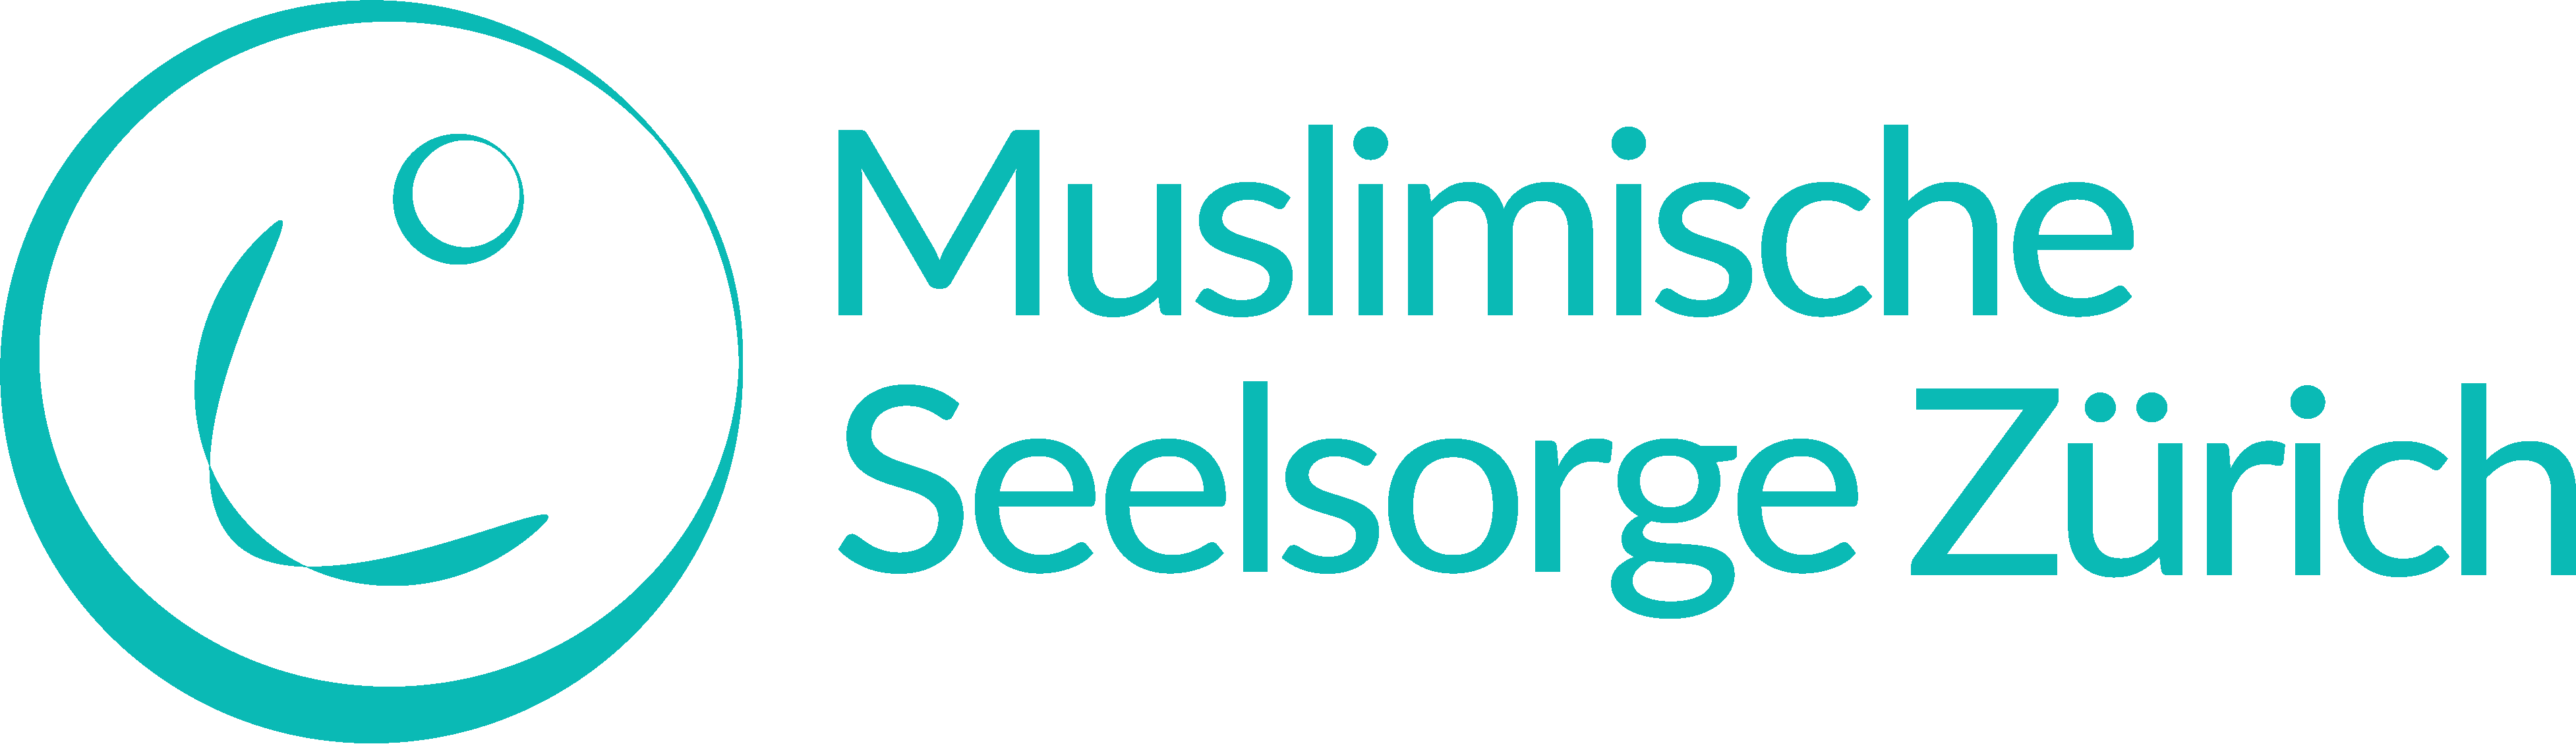 Muslimische seelsorge Logo_Vertical_Left_Aligned